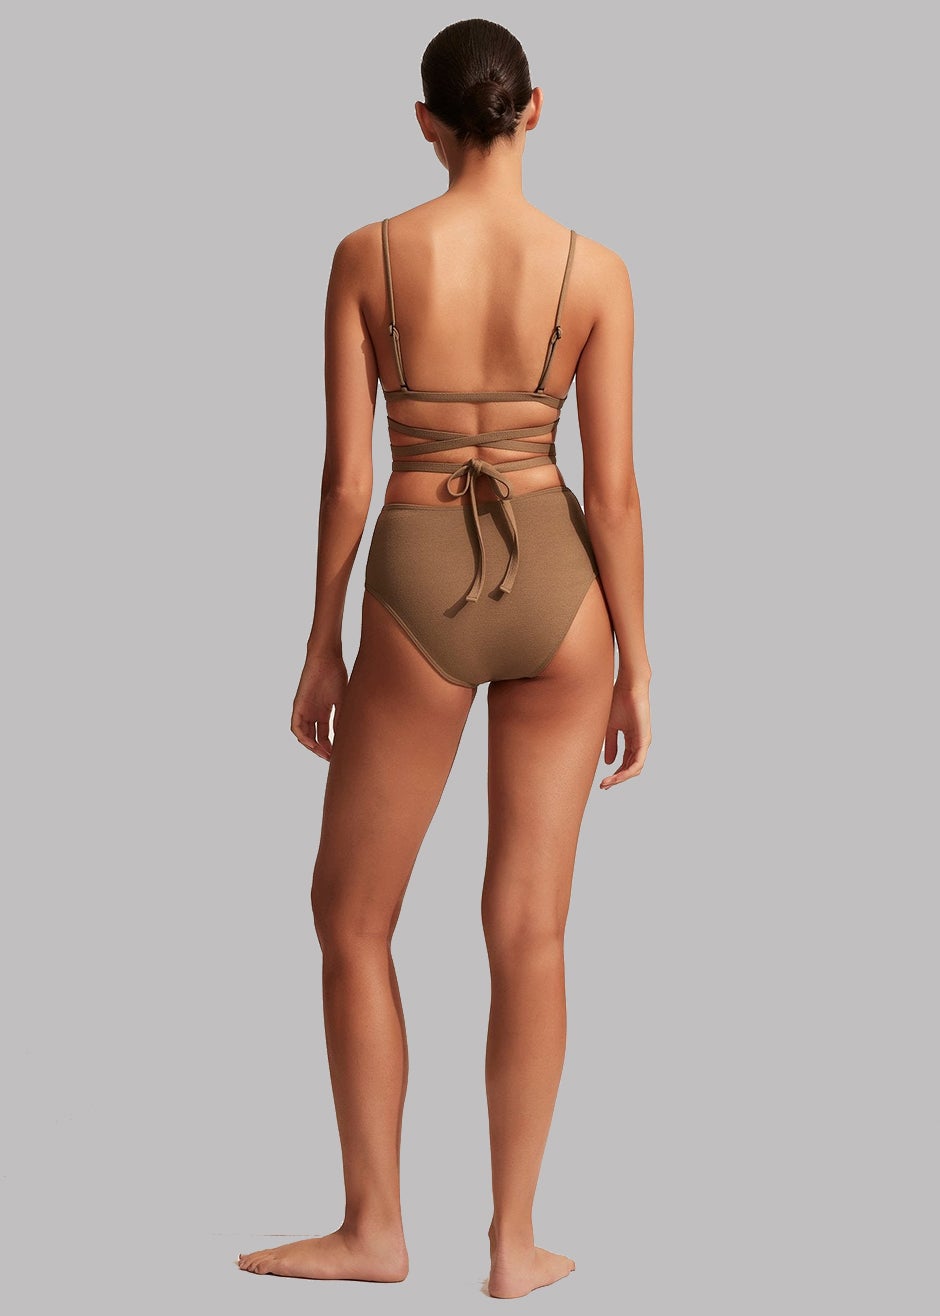 Matteau High Waist Bikini Brief - Cinnamon Crinkle - 1